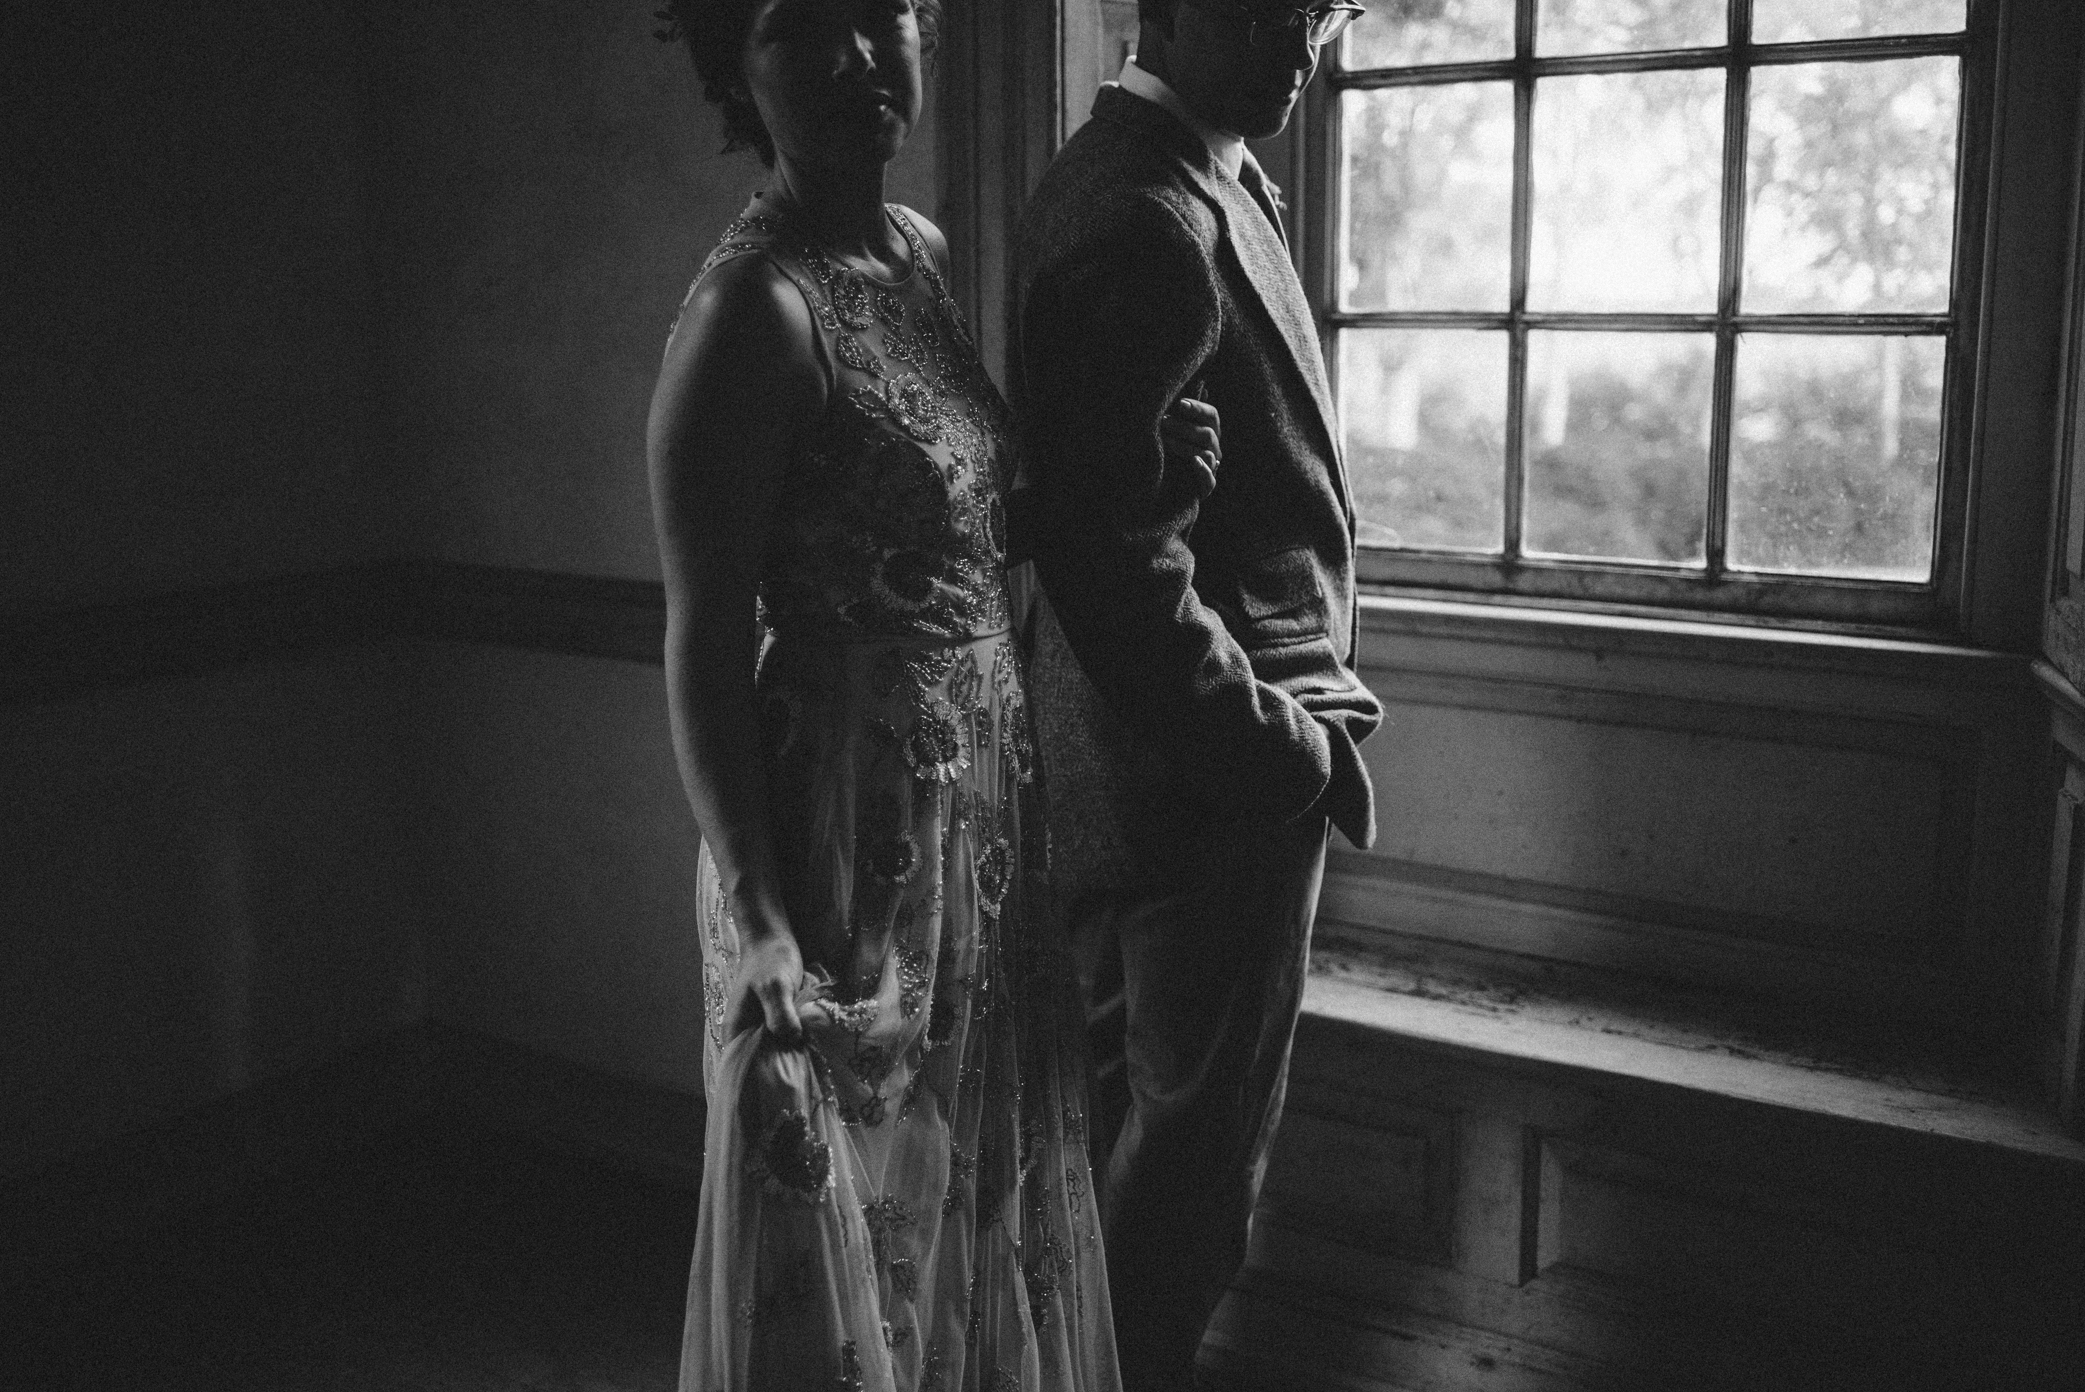 Salubria Historic Manor House Virginia - Moody Scottish Highland Wedding Styled Shoot - White Sails Creative - Sage and Silhouettes - BHLDN - Bijous Sweet Treats_106.JPG